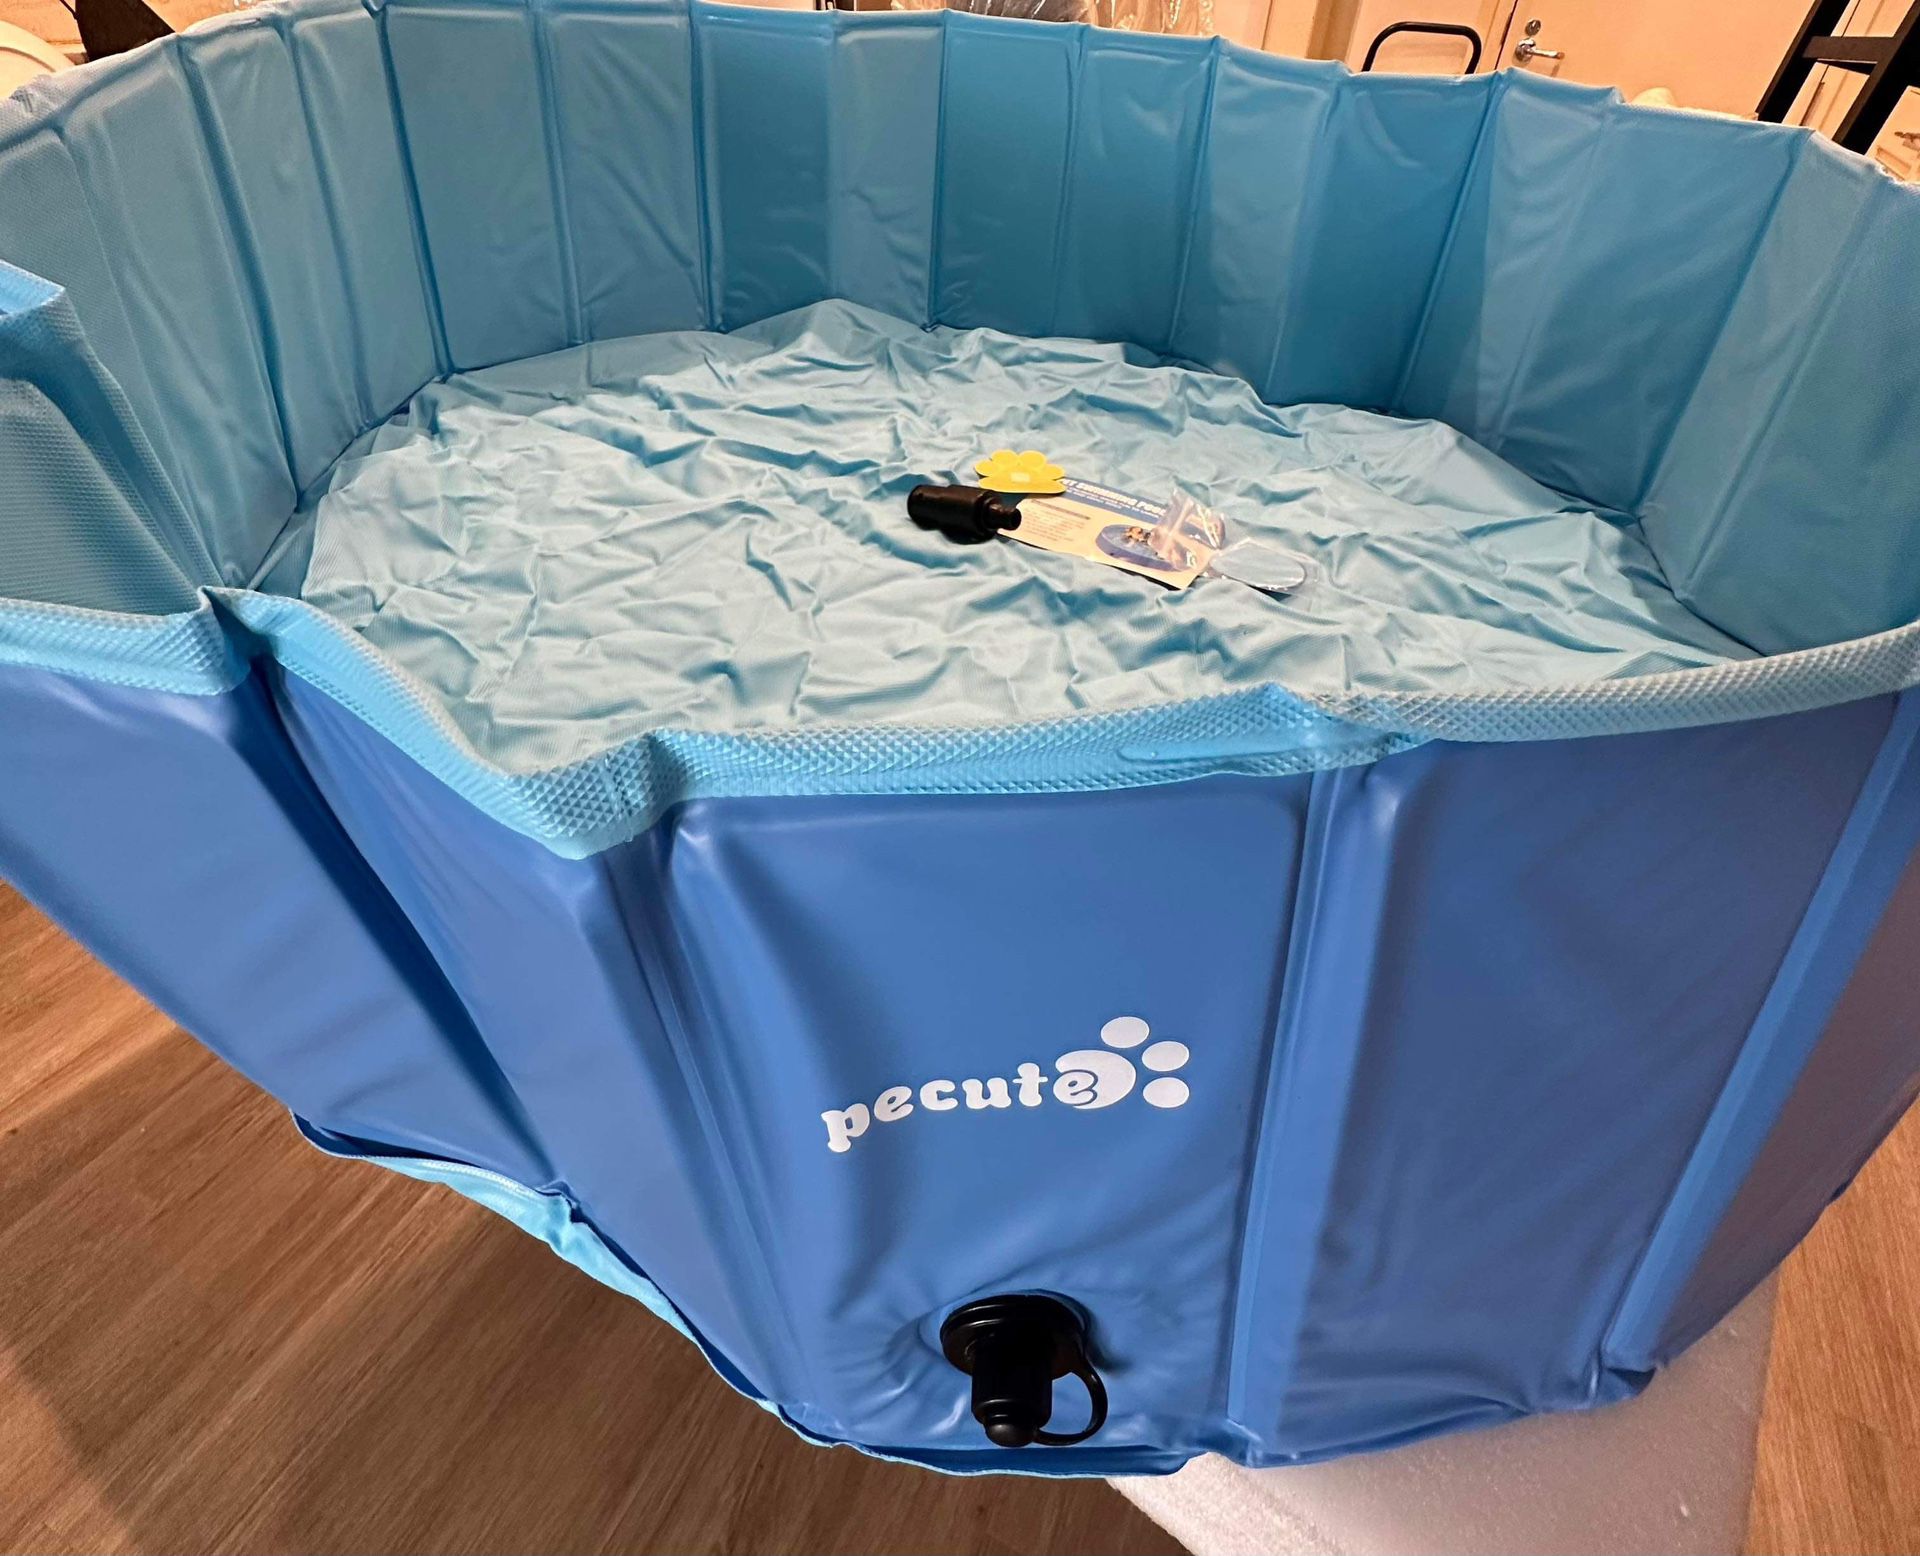 Pecute Dog Pool Foldable, Portable Dog Bathtubs Hard PVC, Multifunctional Dog Swimming Pool Wading Pool 47”x12” E-25